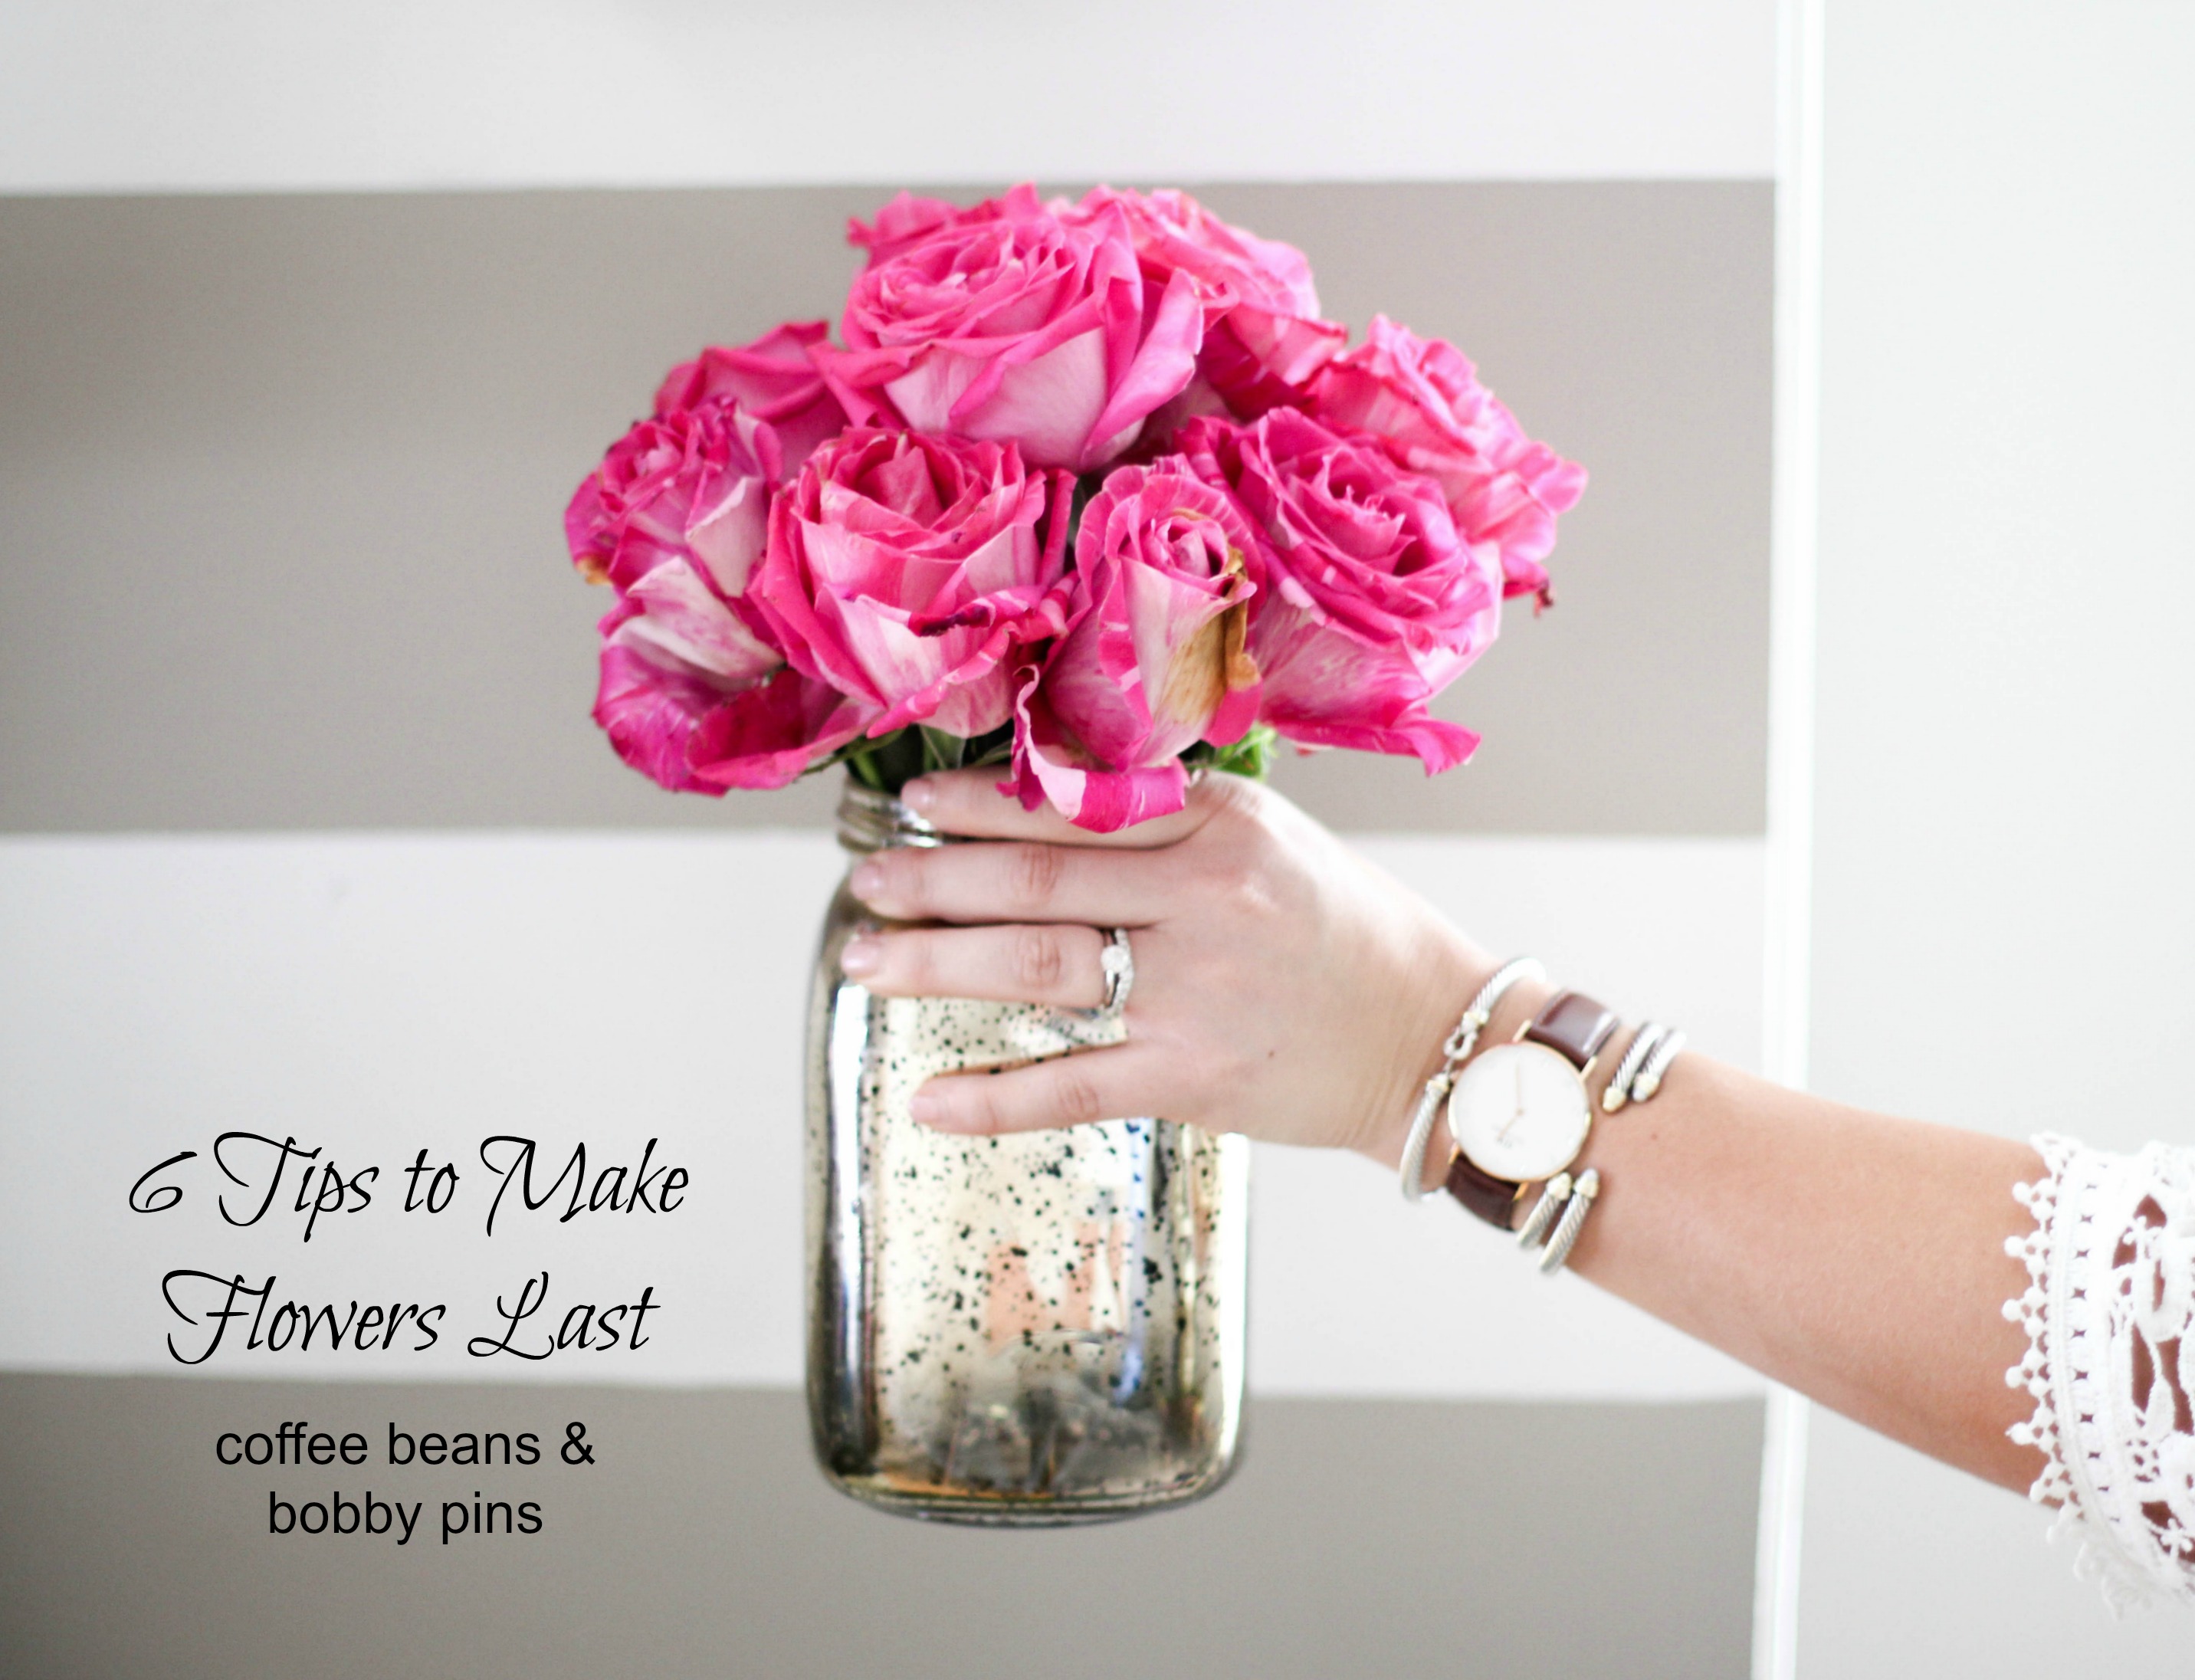 6 tips to help flowers last